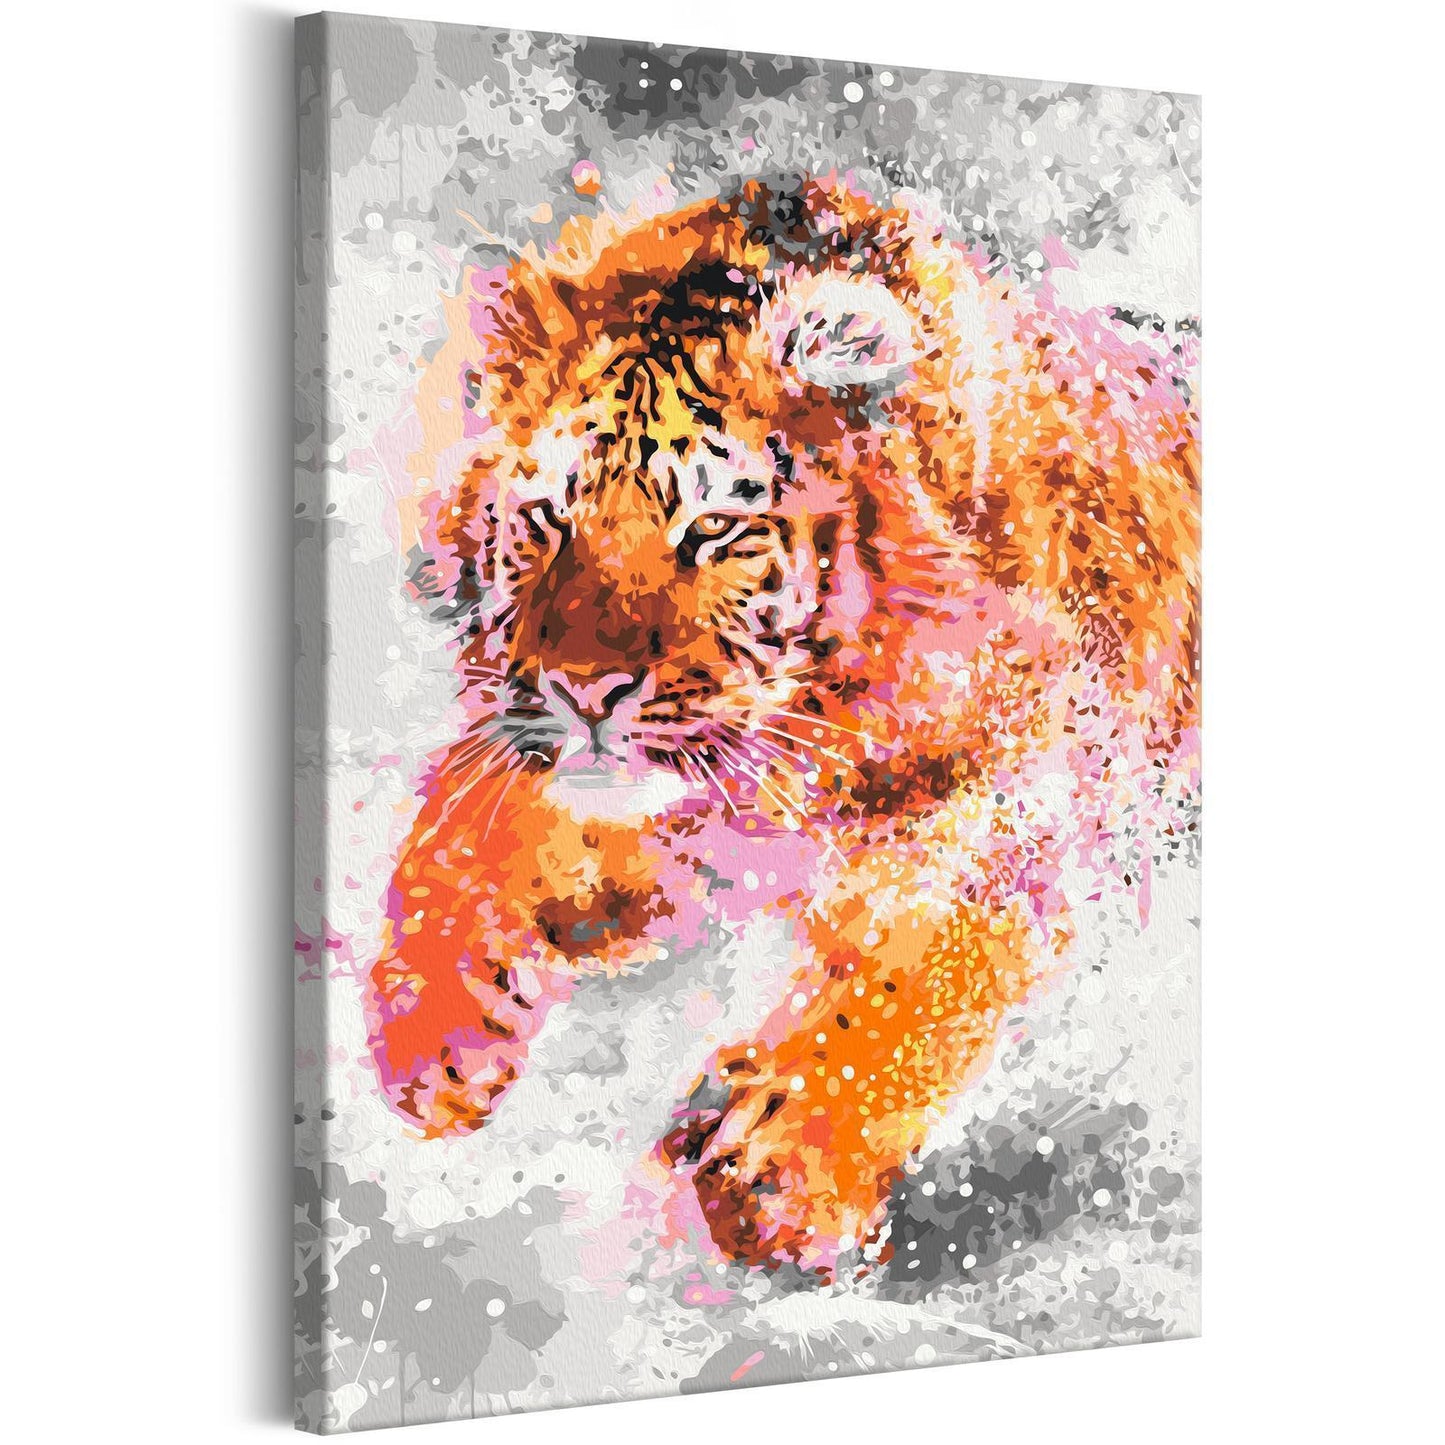 DIY Canvas Painting - Running Tiger 